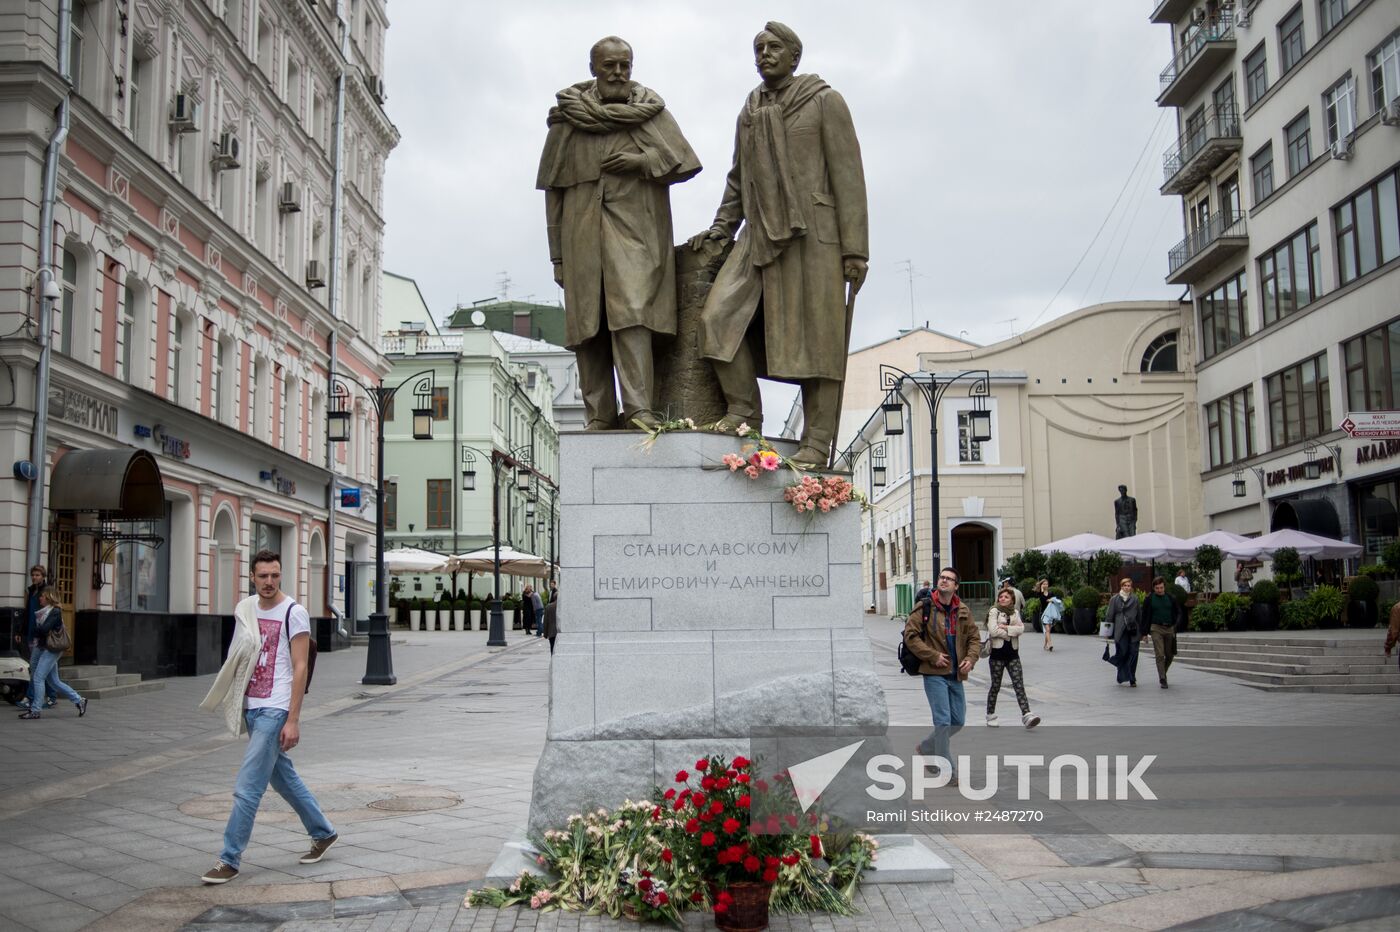 Unveiling of monument to founders of Moscow Art Theater, Konstantin Stanislavsky and Vladimir Nemirovich-Danchenko